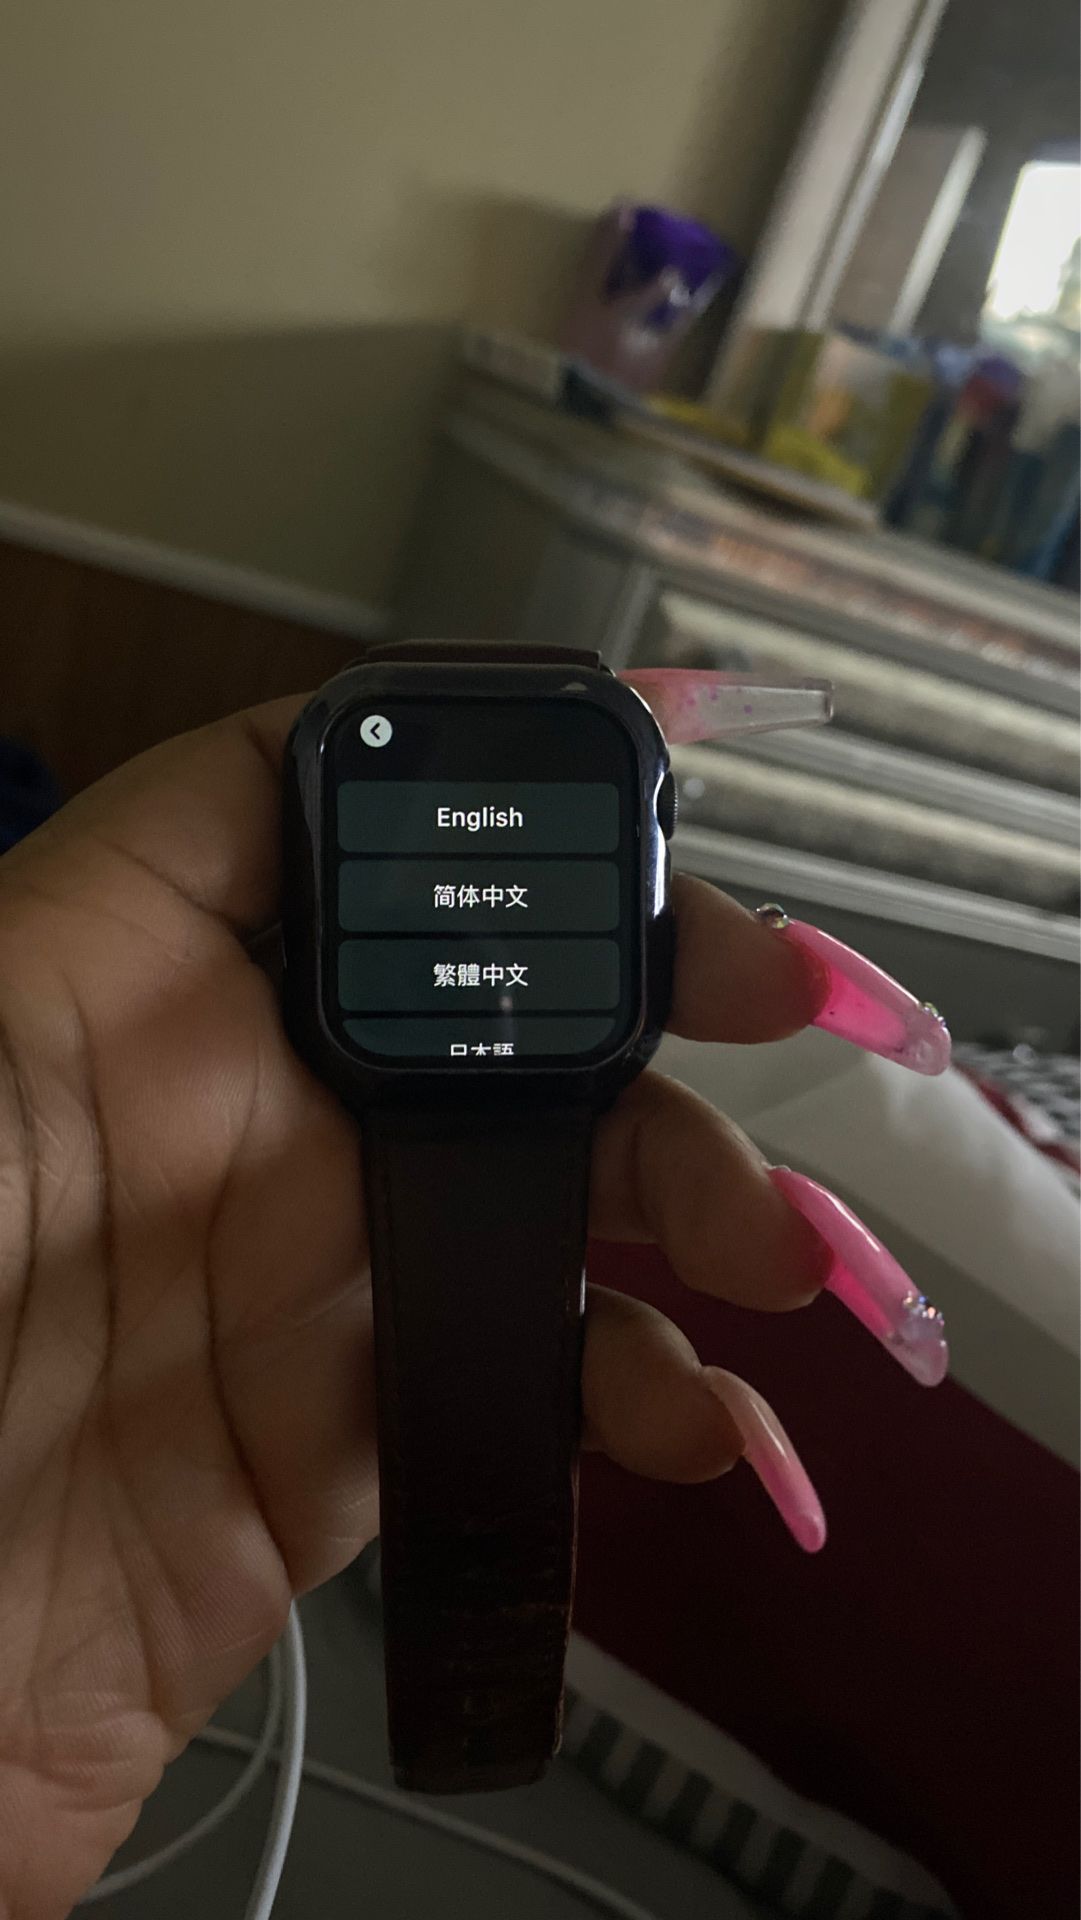 Cellular 44Mm Series 5 Apple Watch